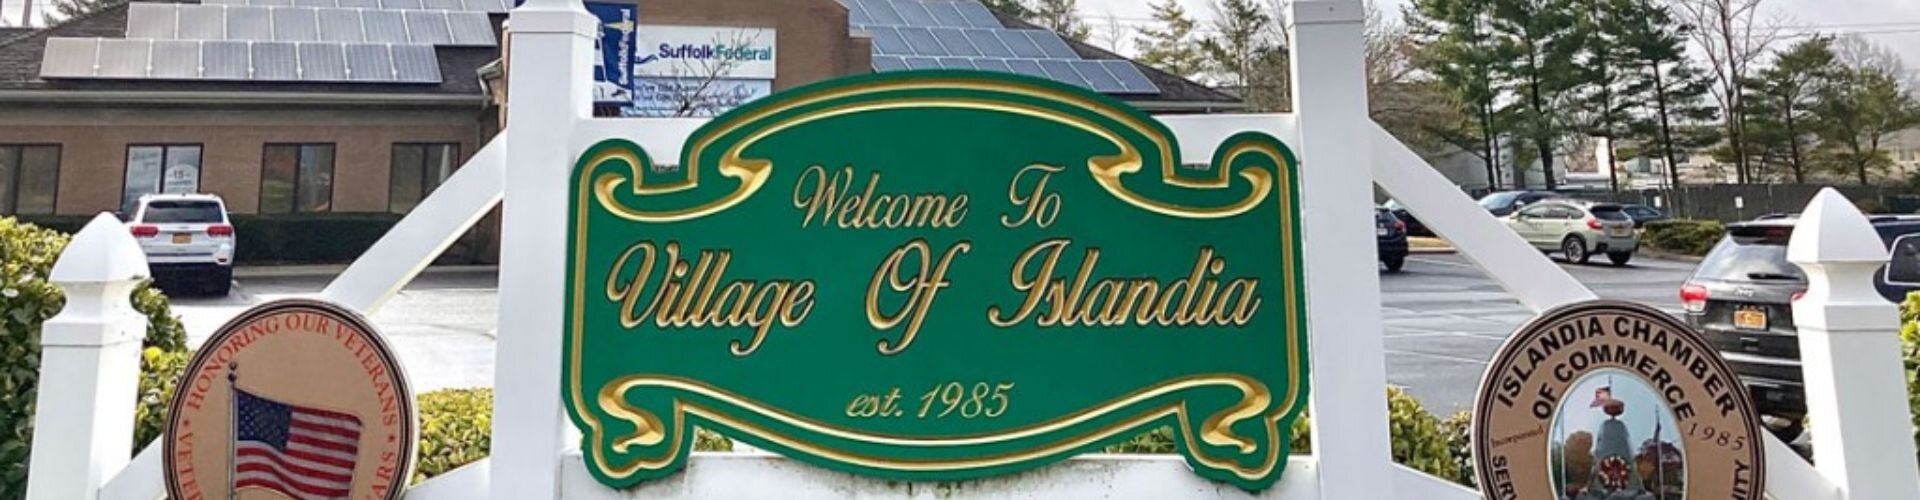 Islandia title - Cash Buyers in Long Island